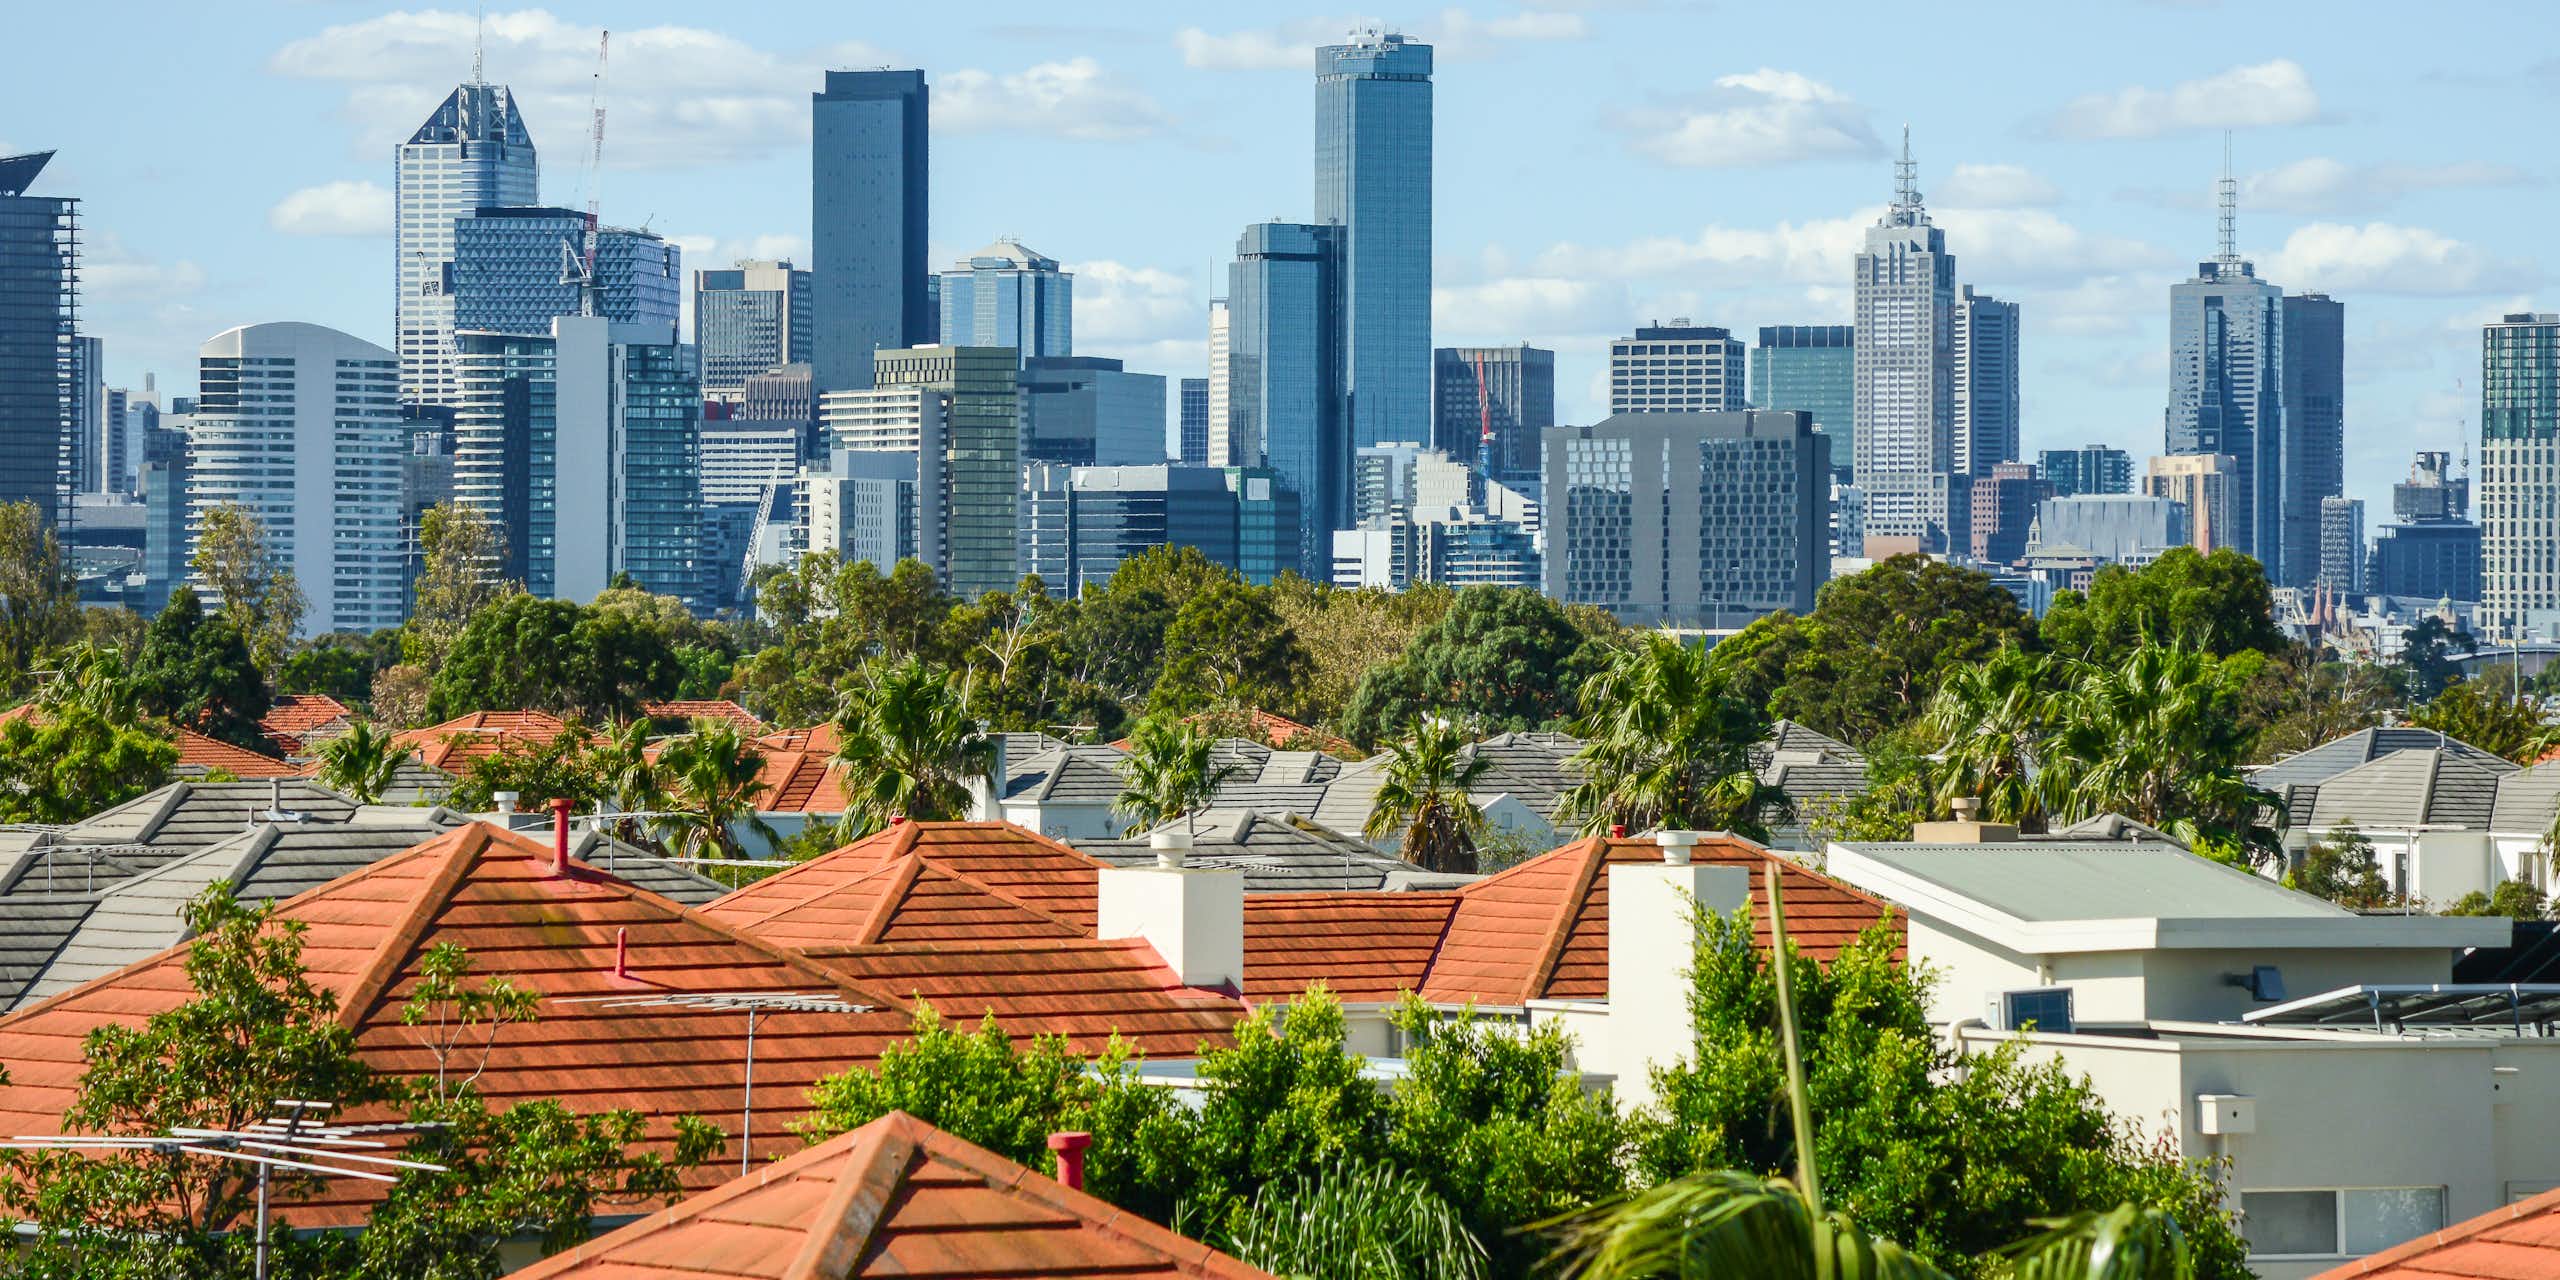 Melbourne skyline seen in distance behind suburban rooftops